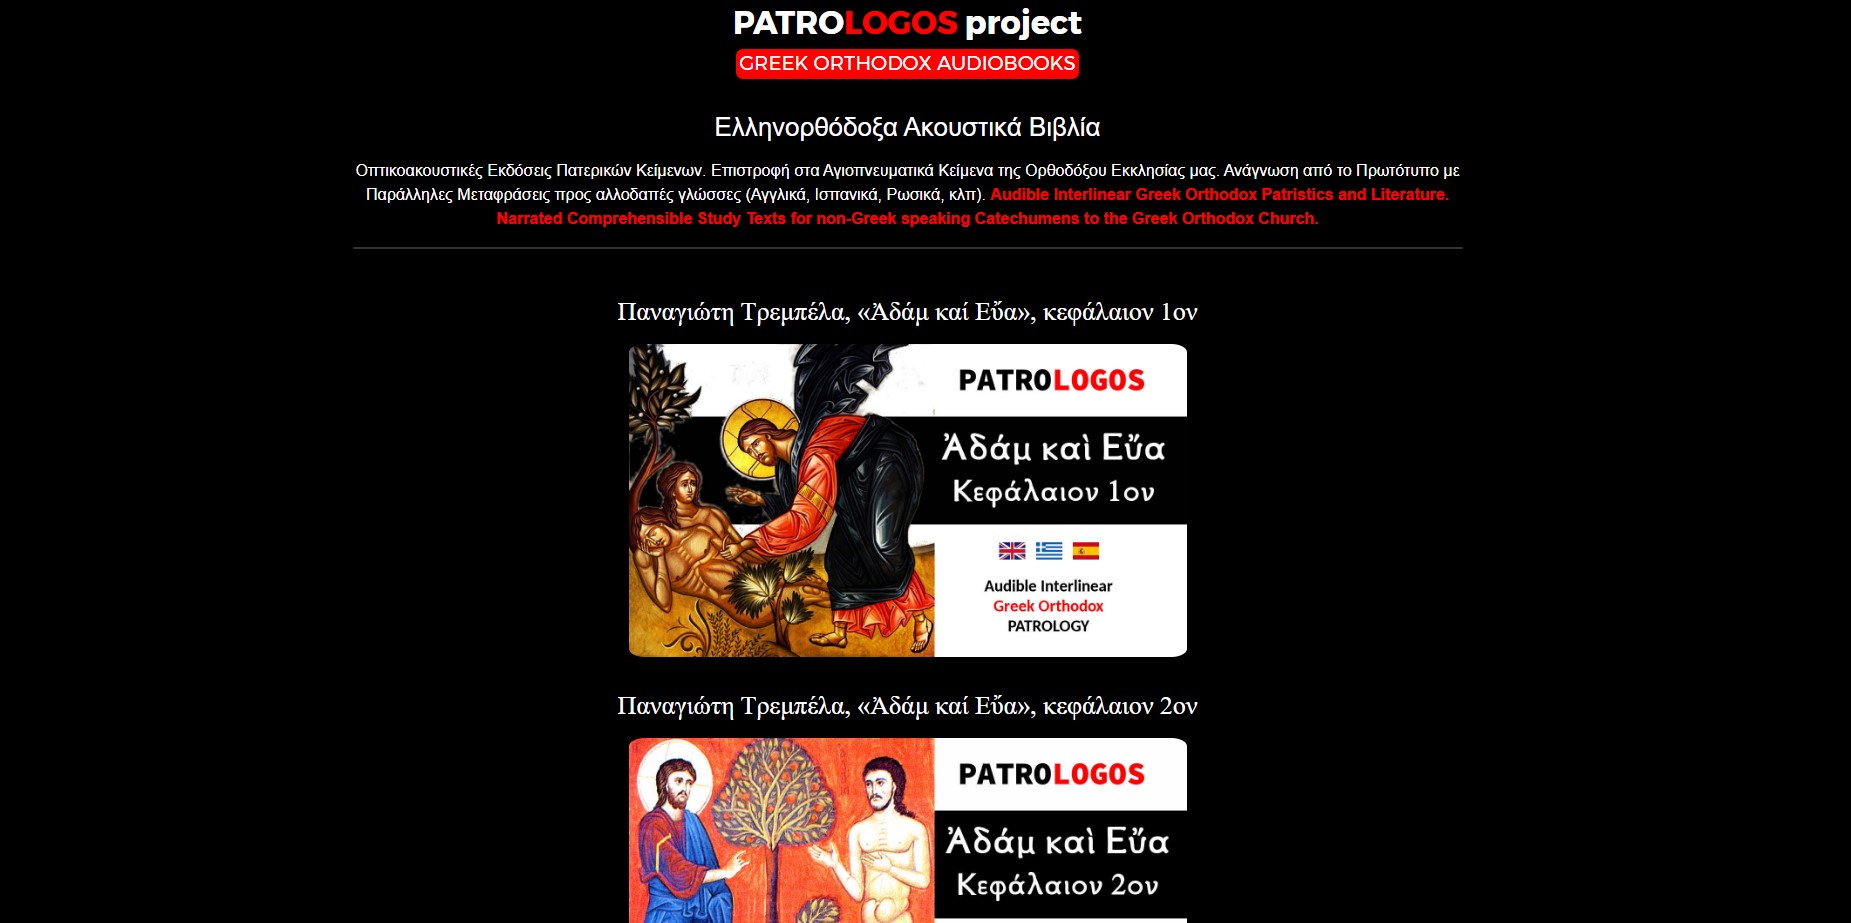 Patrologos Project